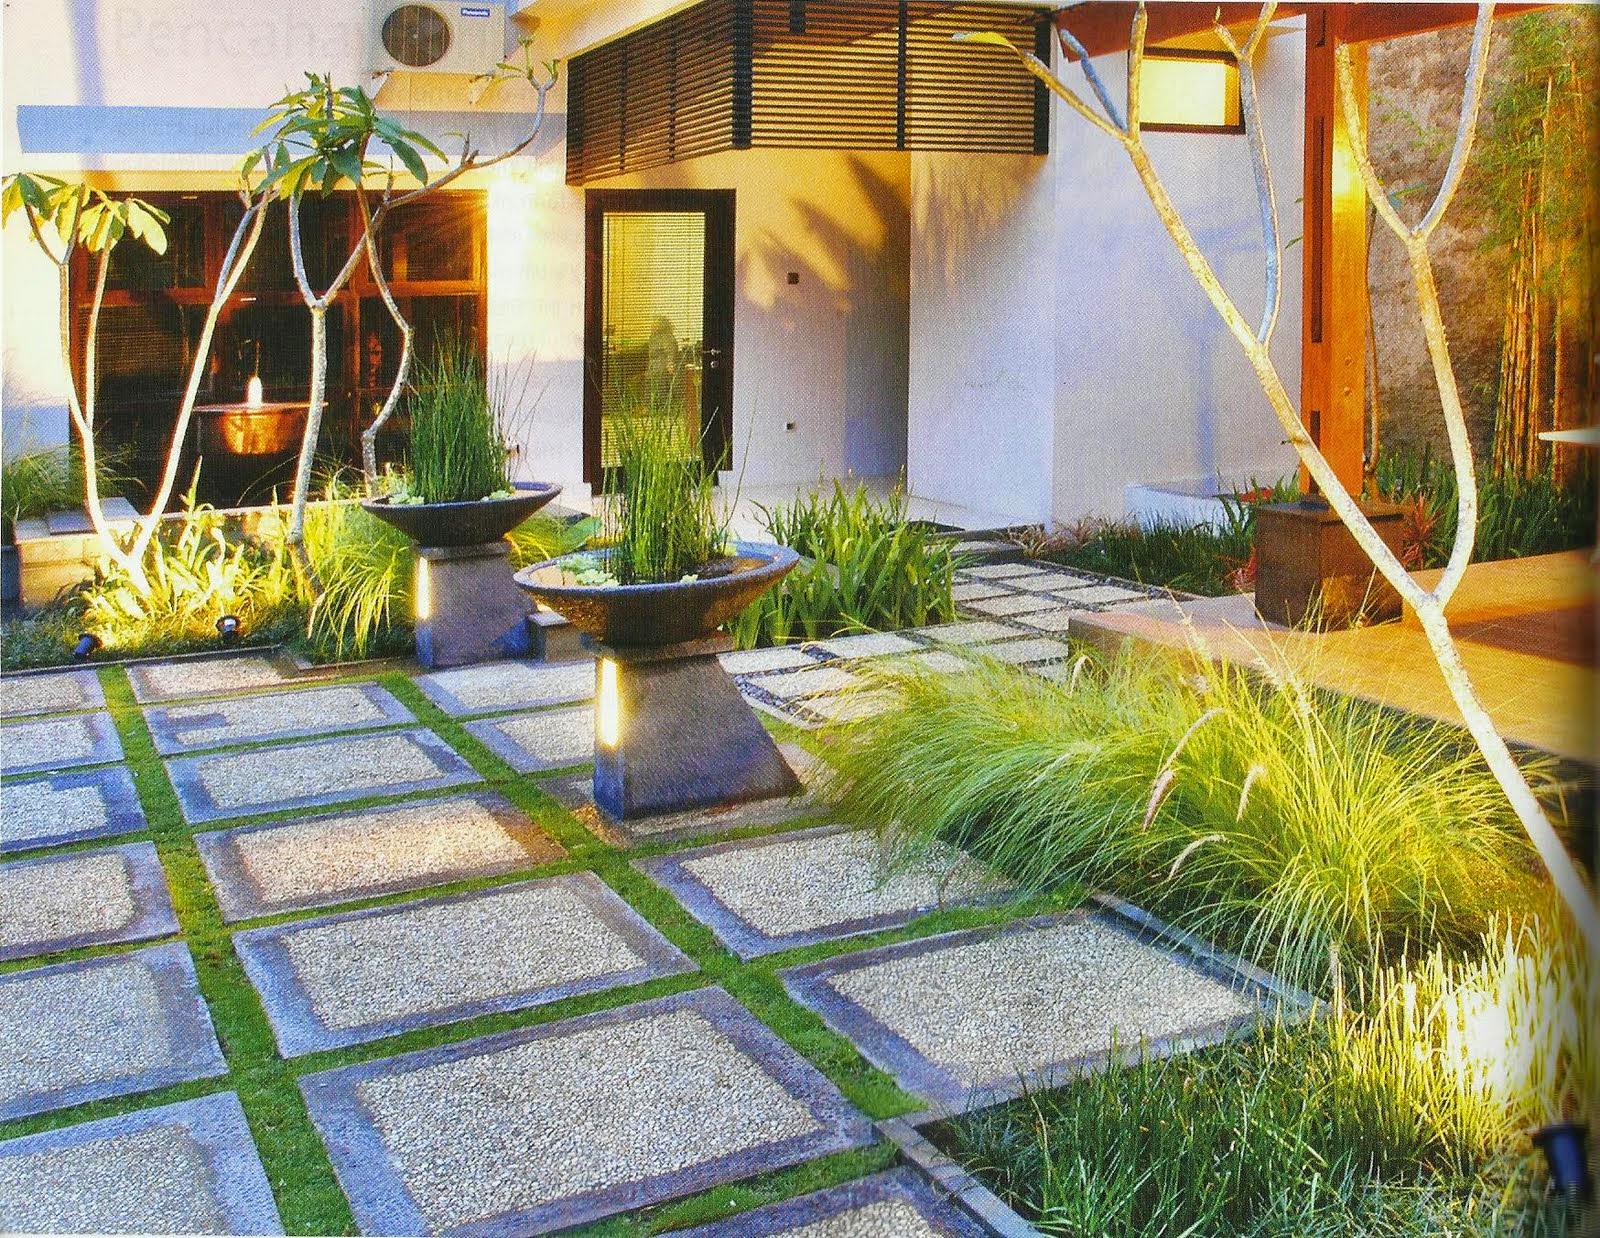 Minimalist House Garden Design Concept - Inspiring Interior Design Ideas